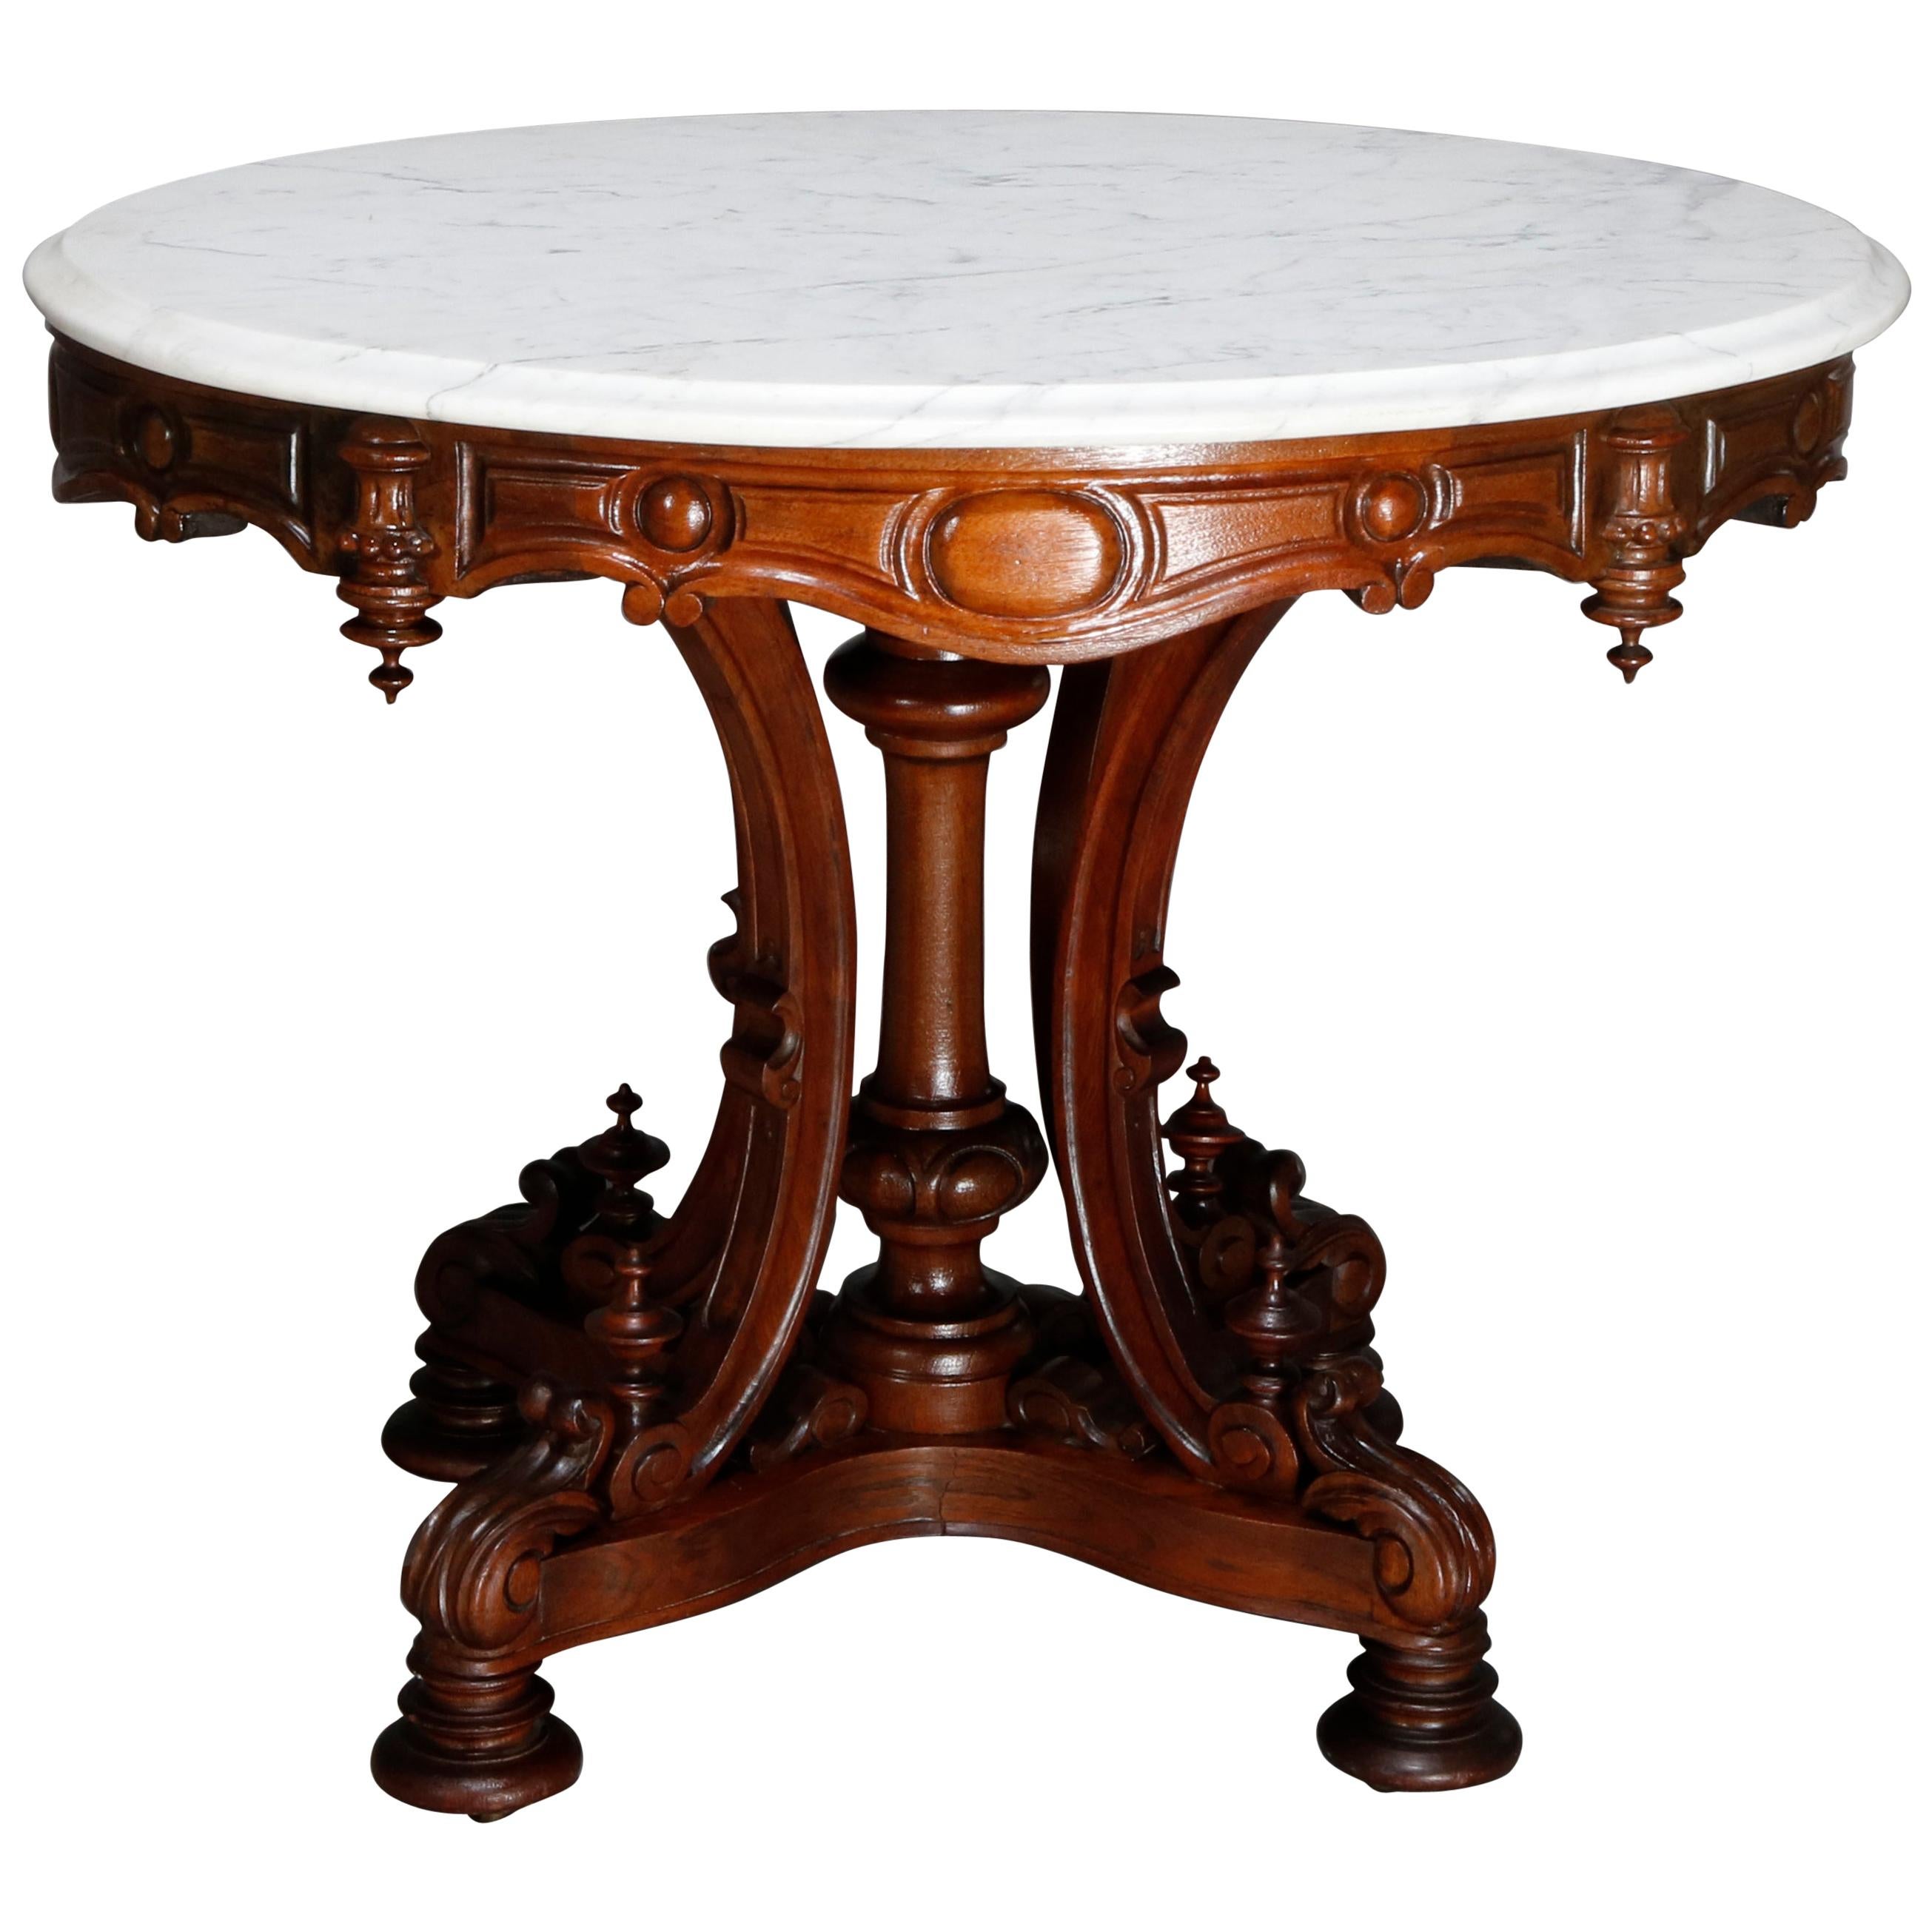 Antique Renaissance Revival Carved Walnut & Marble Center Table, circa 1880 